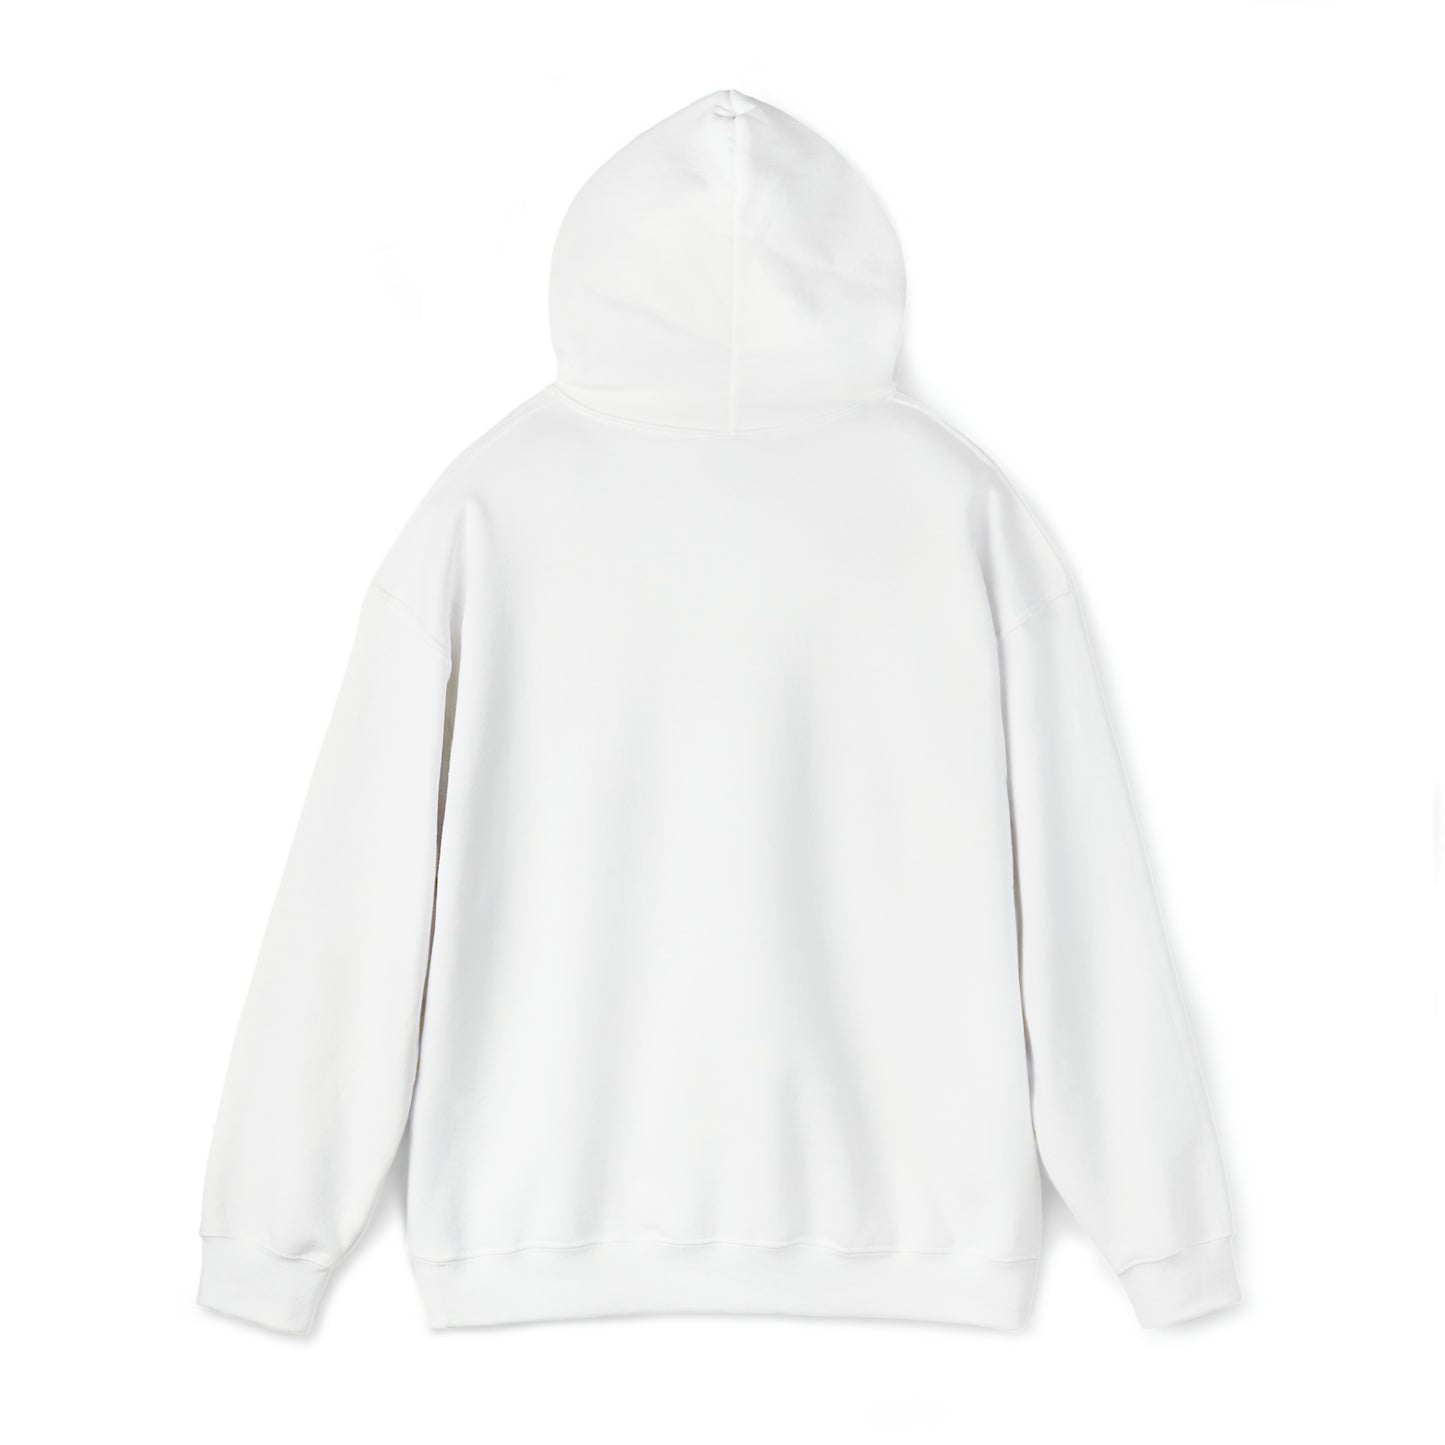 My Hustle Can't Be Imitated Heavy Blend™ Hooded Sweatshirt - Arianna's Kloset